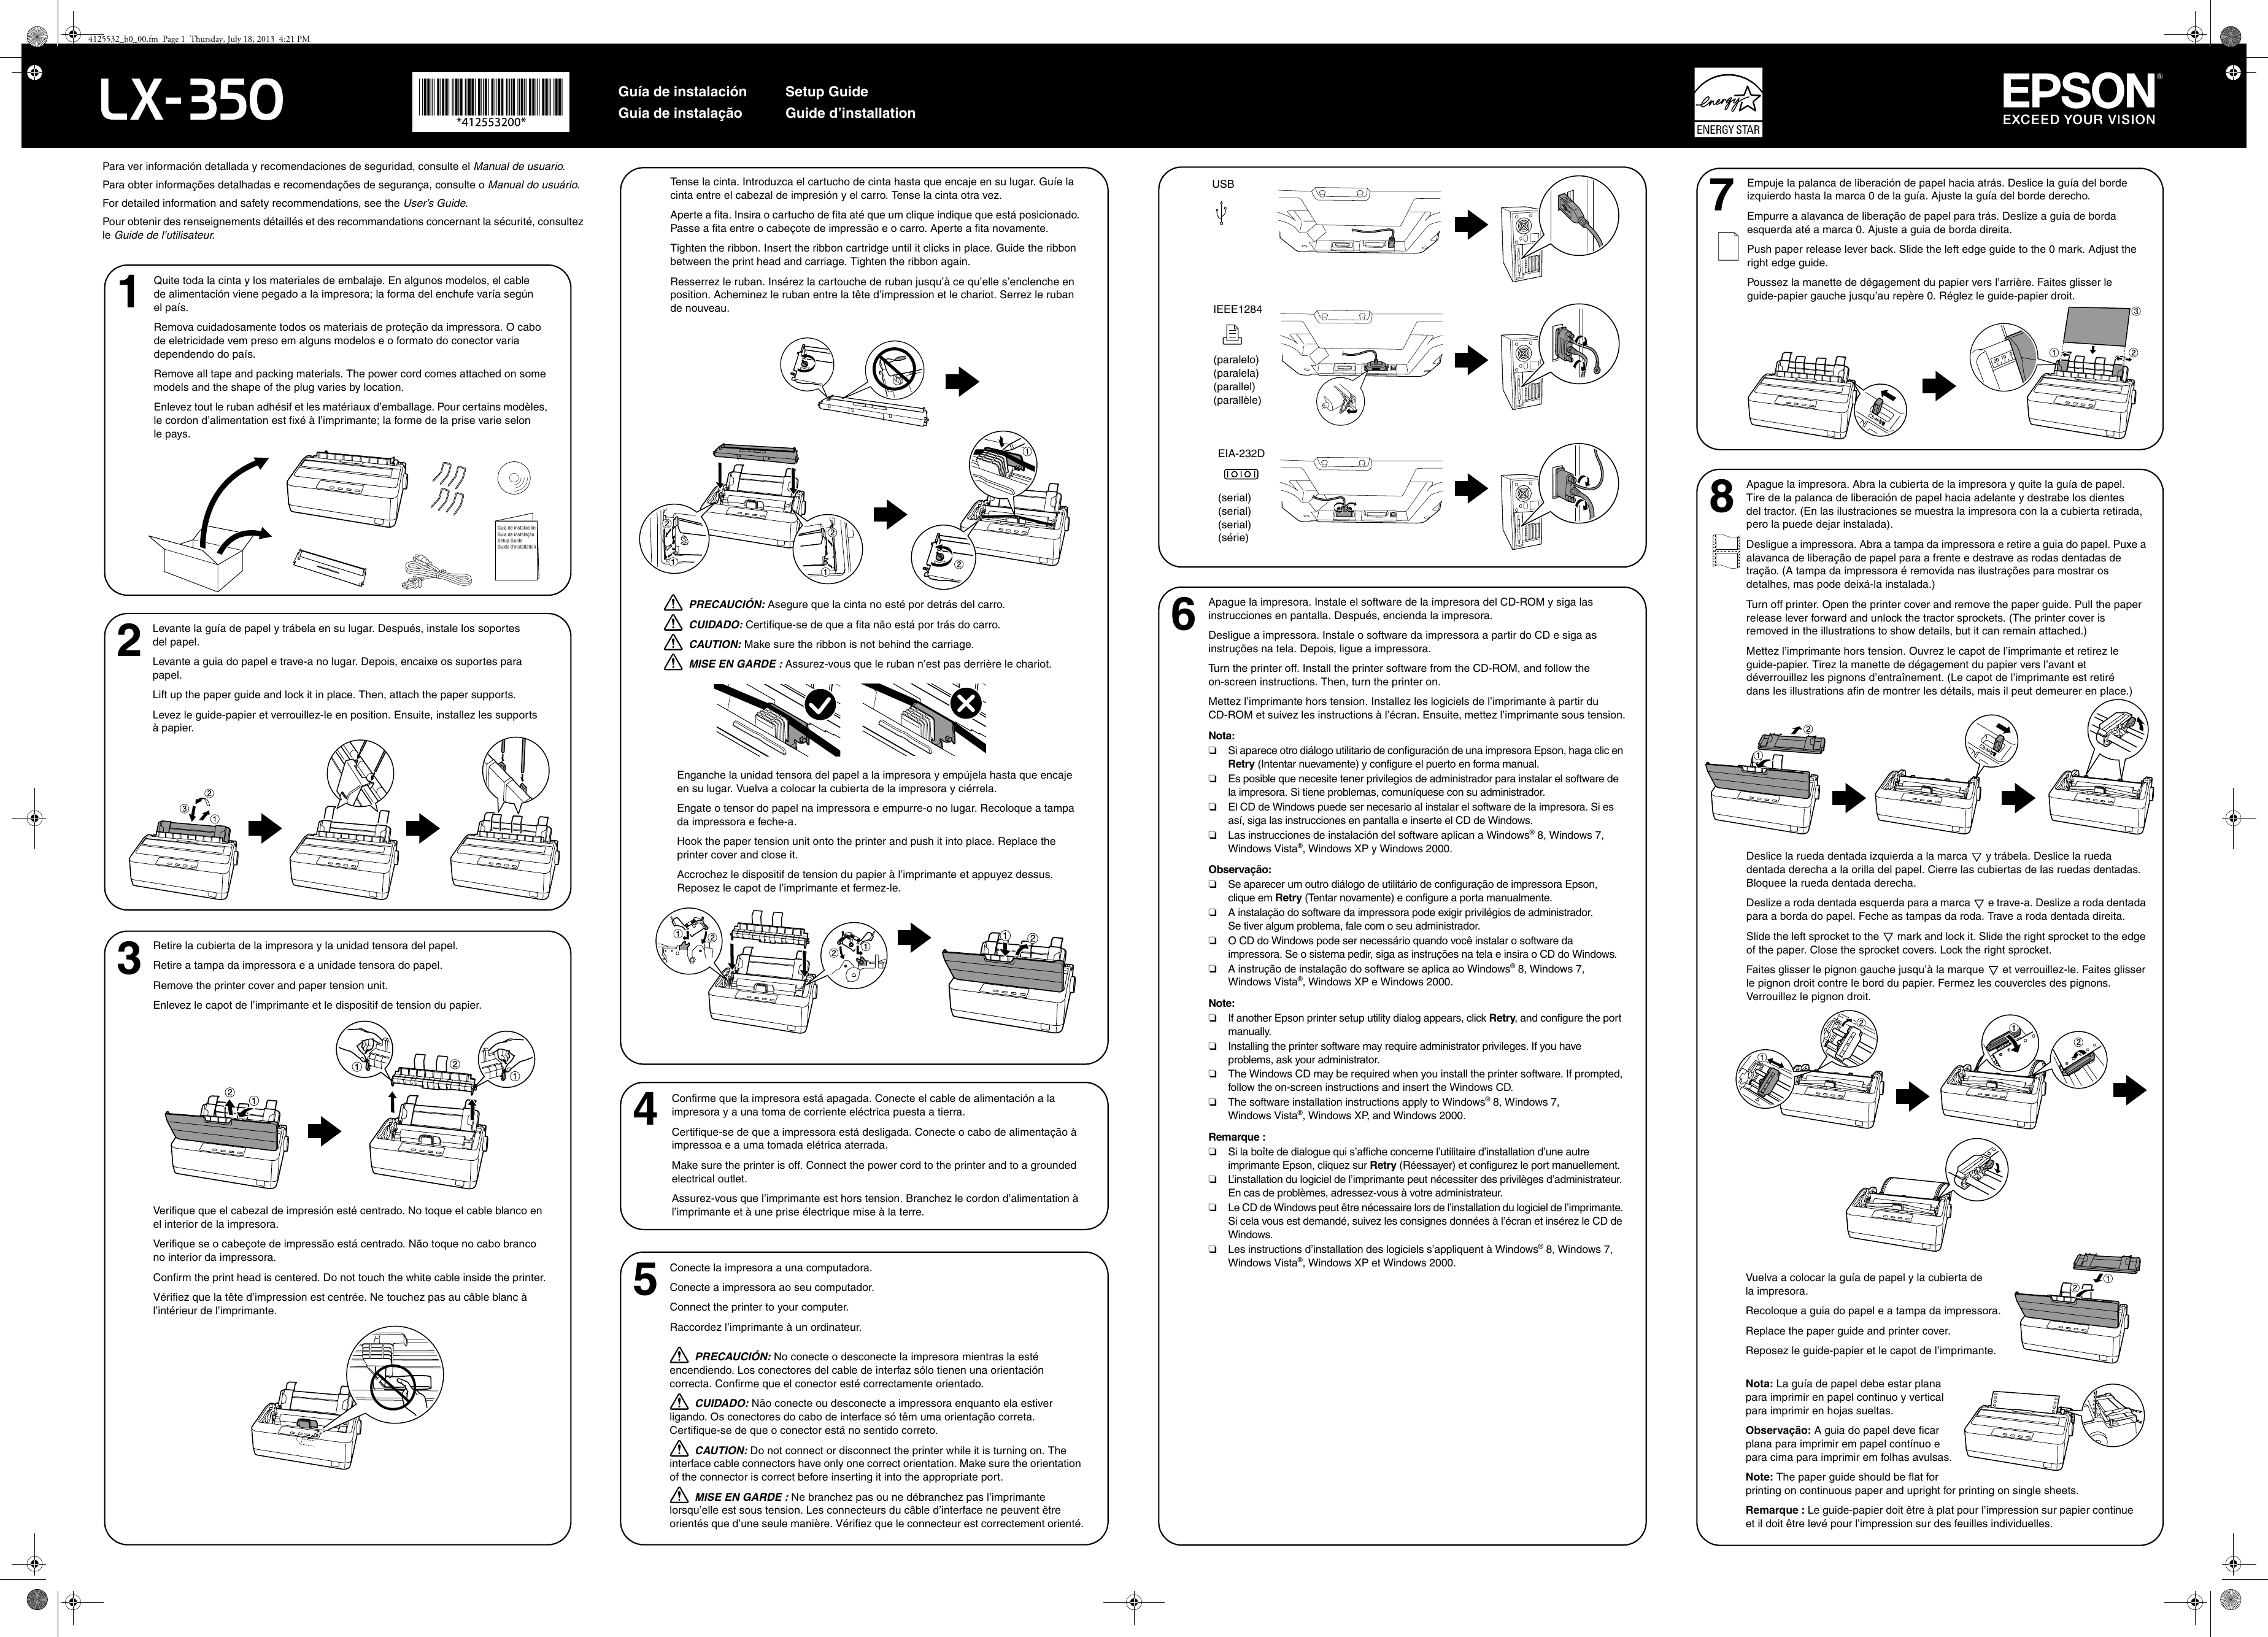 Page 2 of 4 - Epson Epson-Lx-350-Impact-Printer-Setup-Guide- Setup Guide - LX-350  Epson-lx-350-impact-printer-setup-guide